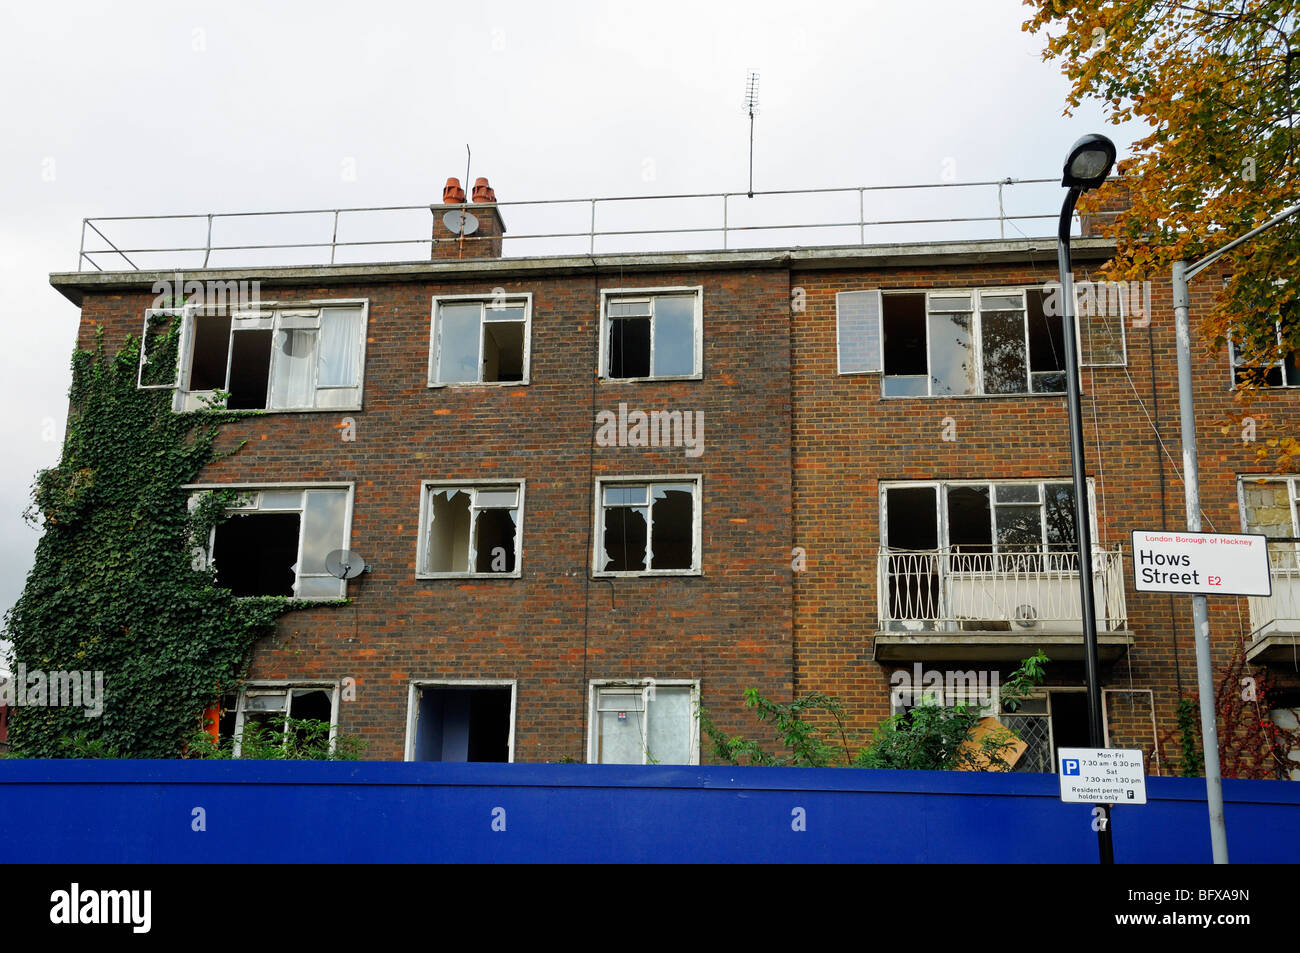 Derelict flats behind hoardings, Hows Street Hackney London England UK Stock Photo